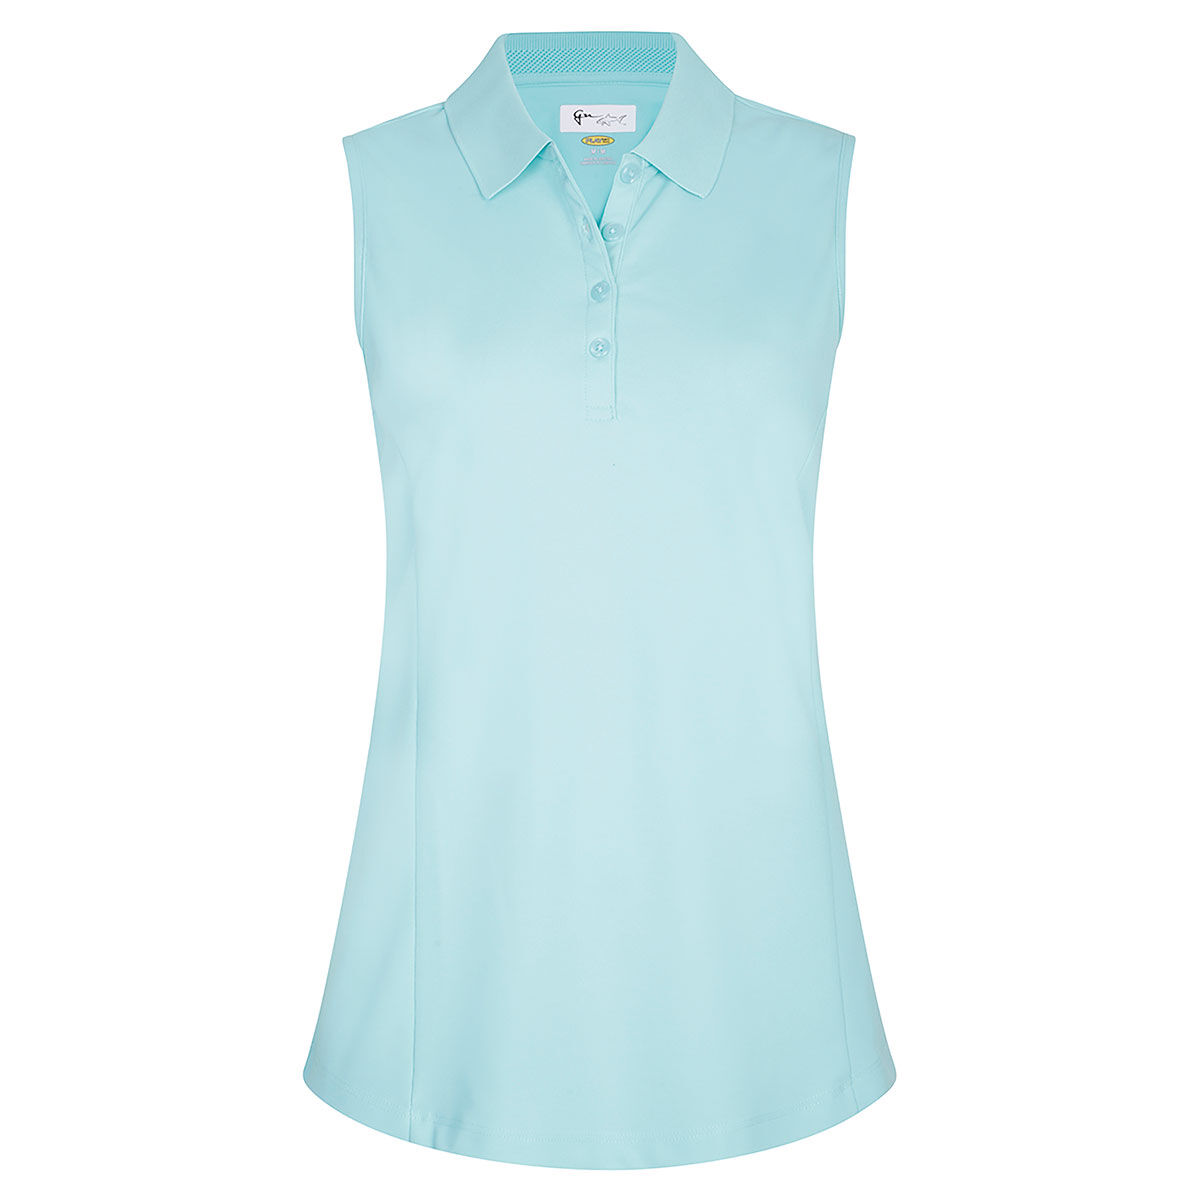 Polo Greg Norman Sleeveless pour femmes, femme, Small, Cool mint | Online Golf